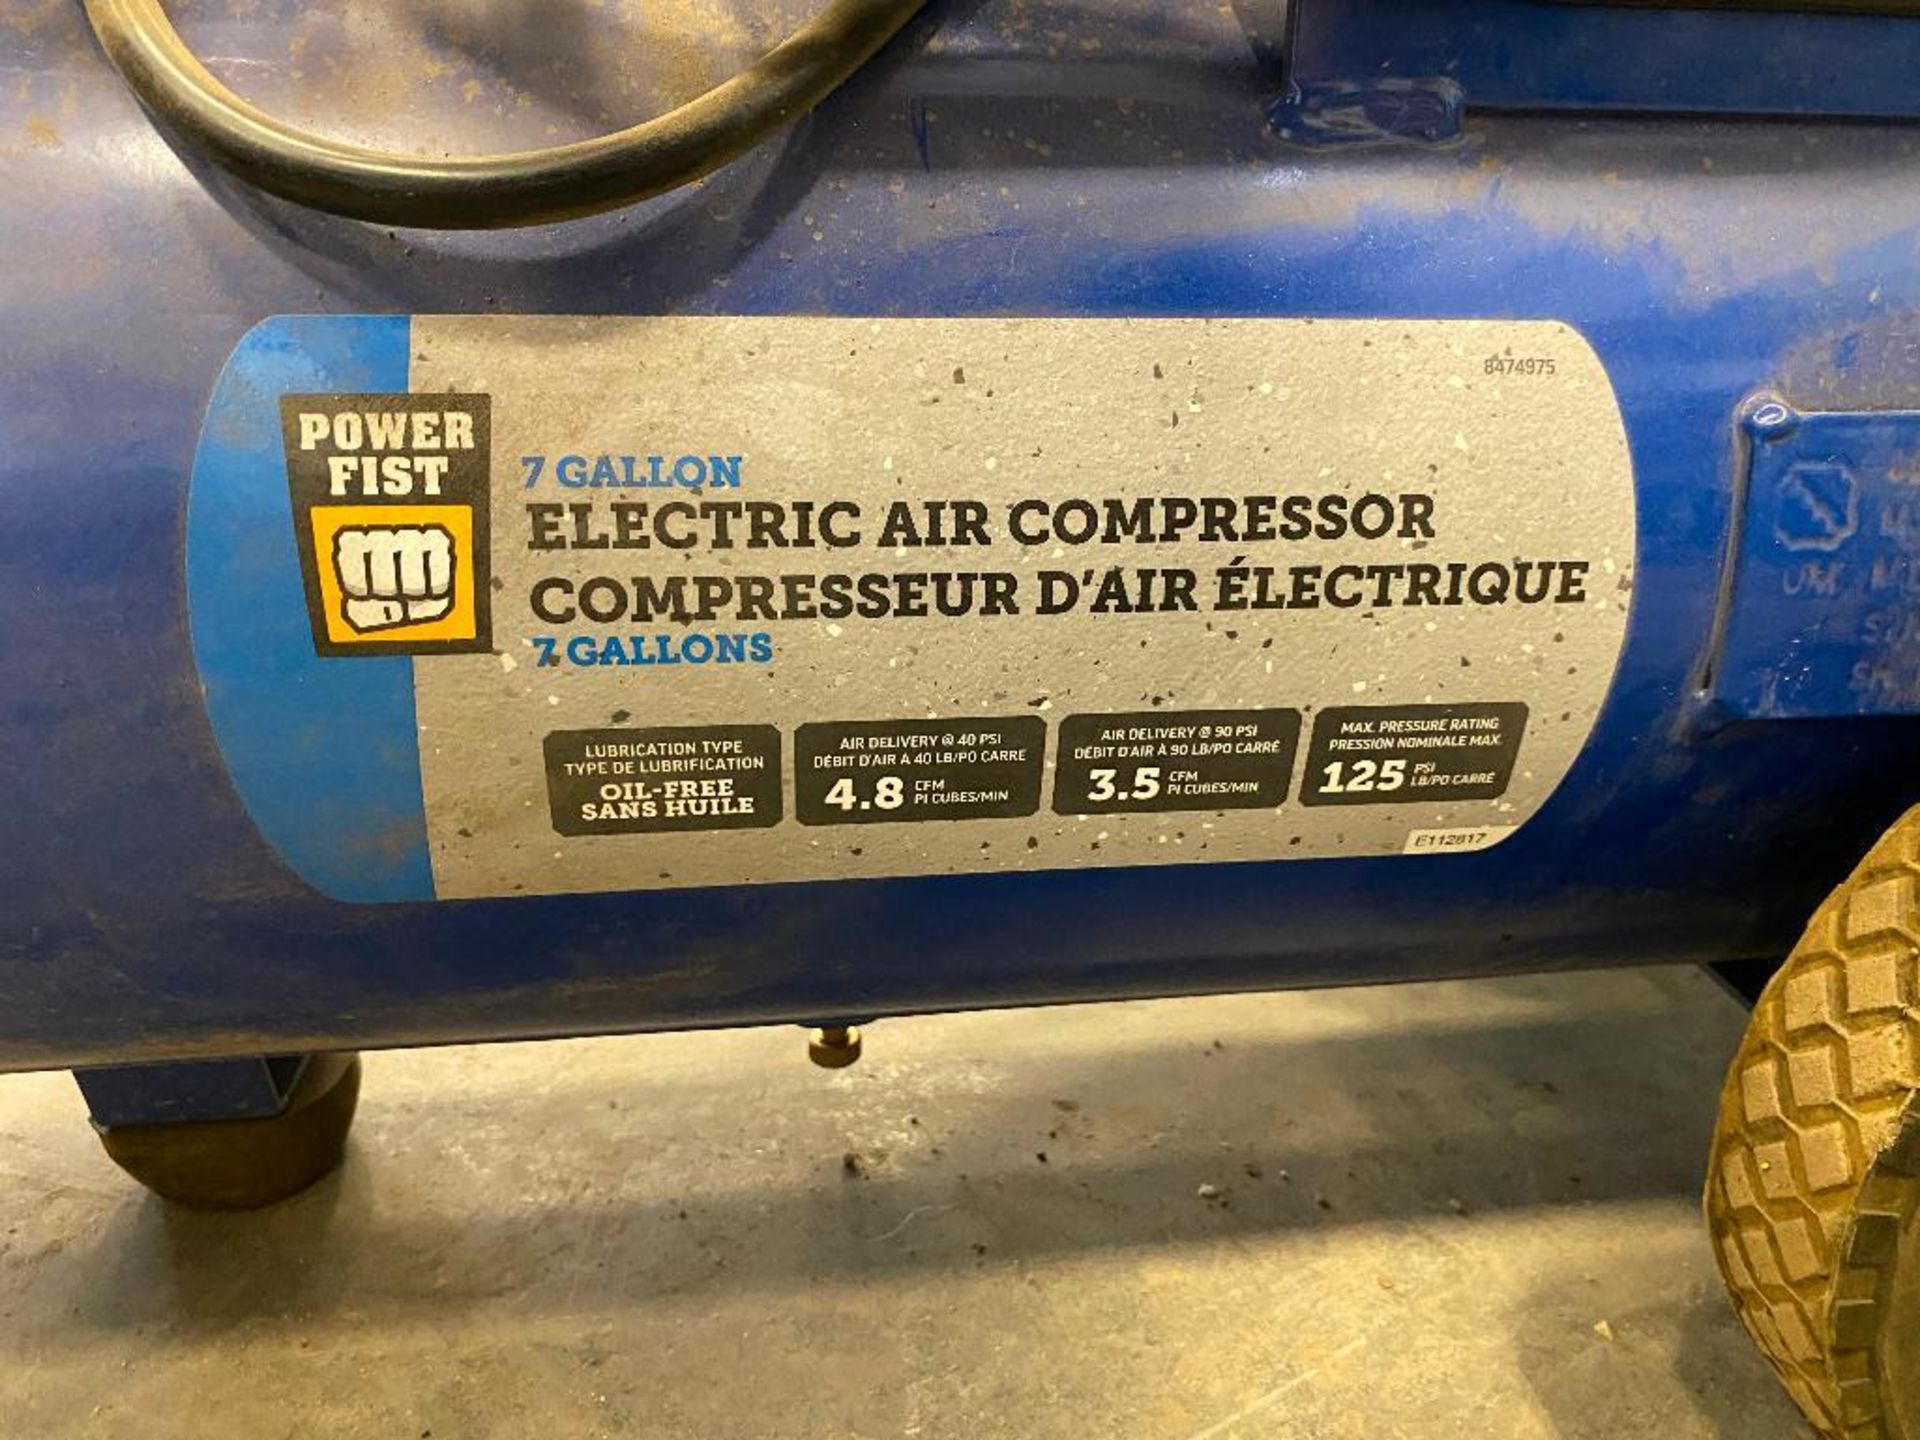 Power Fist 7 Gallon Air Compressor - Image 2 of 4